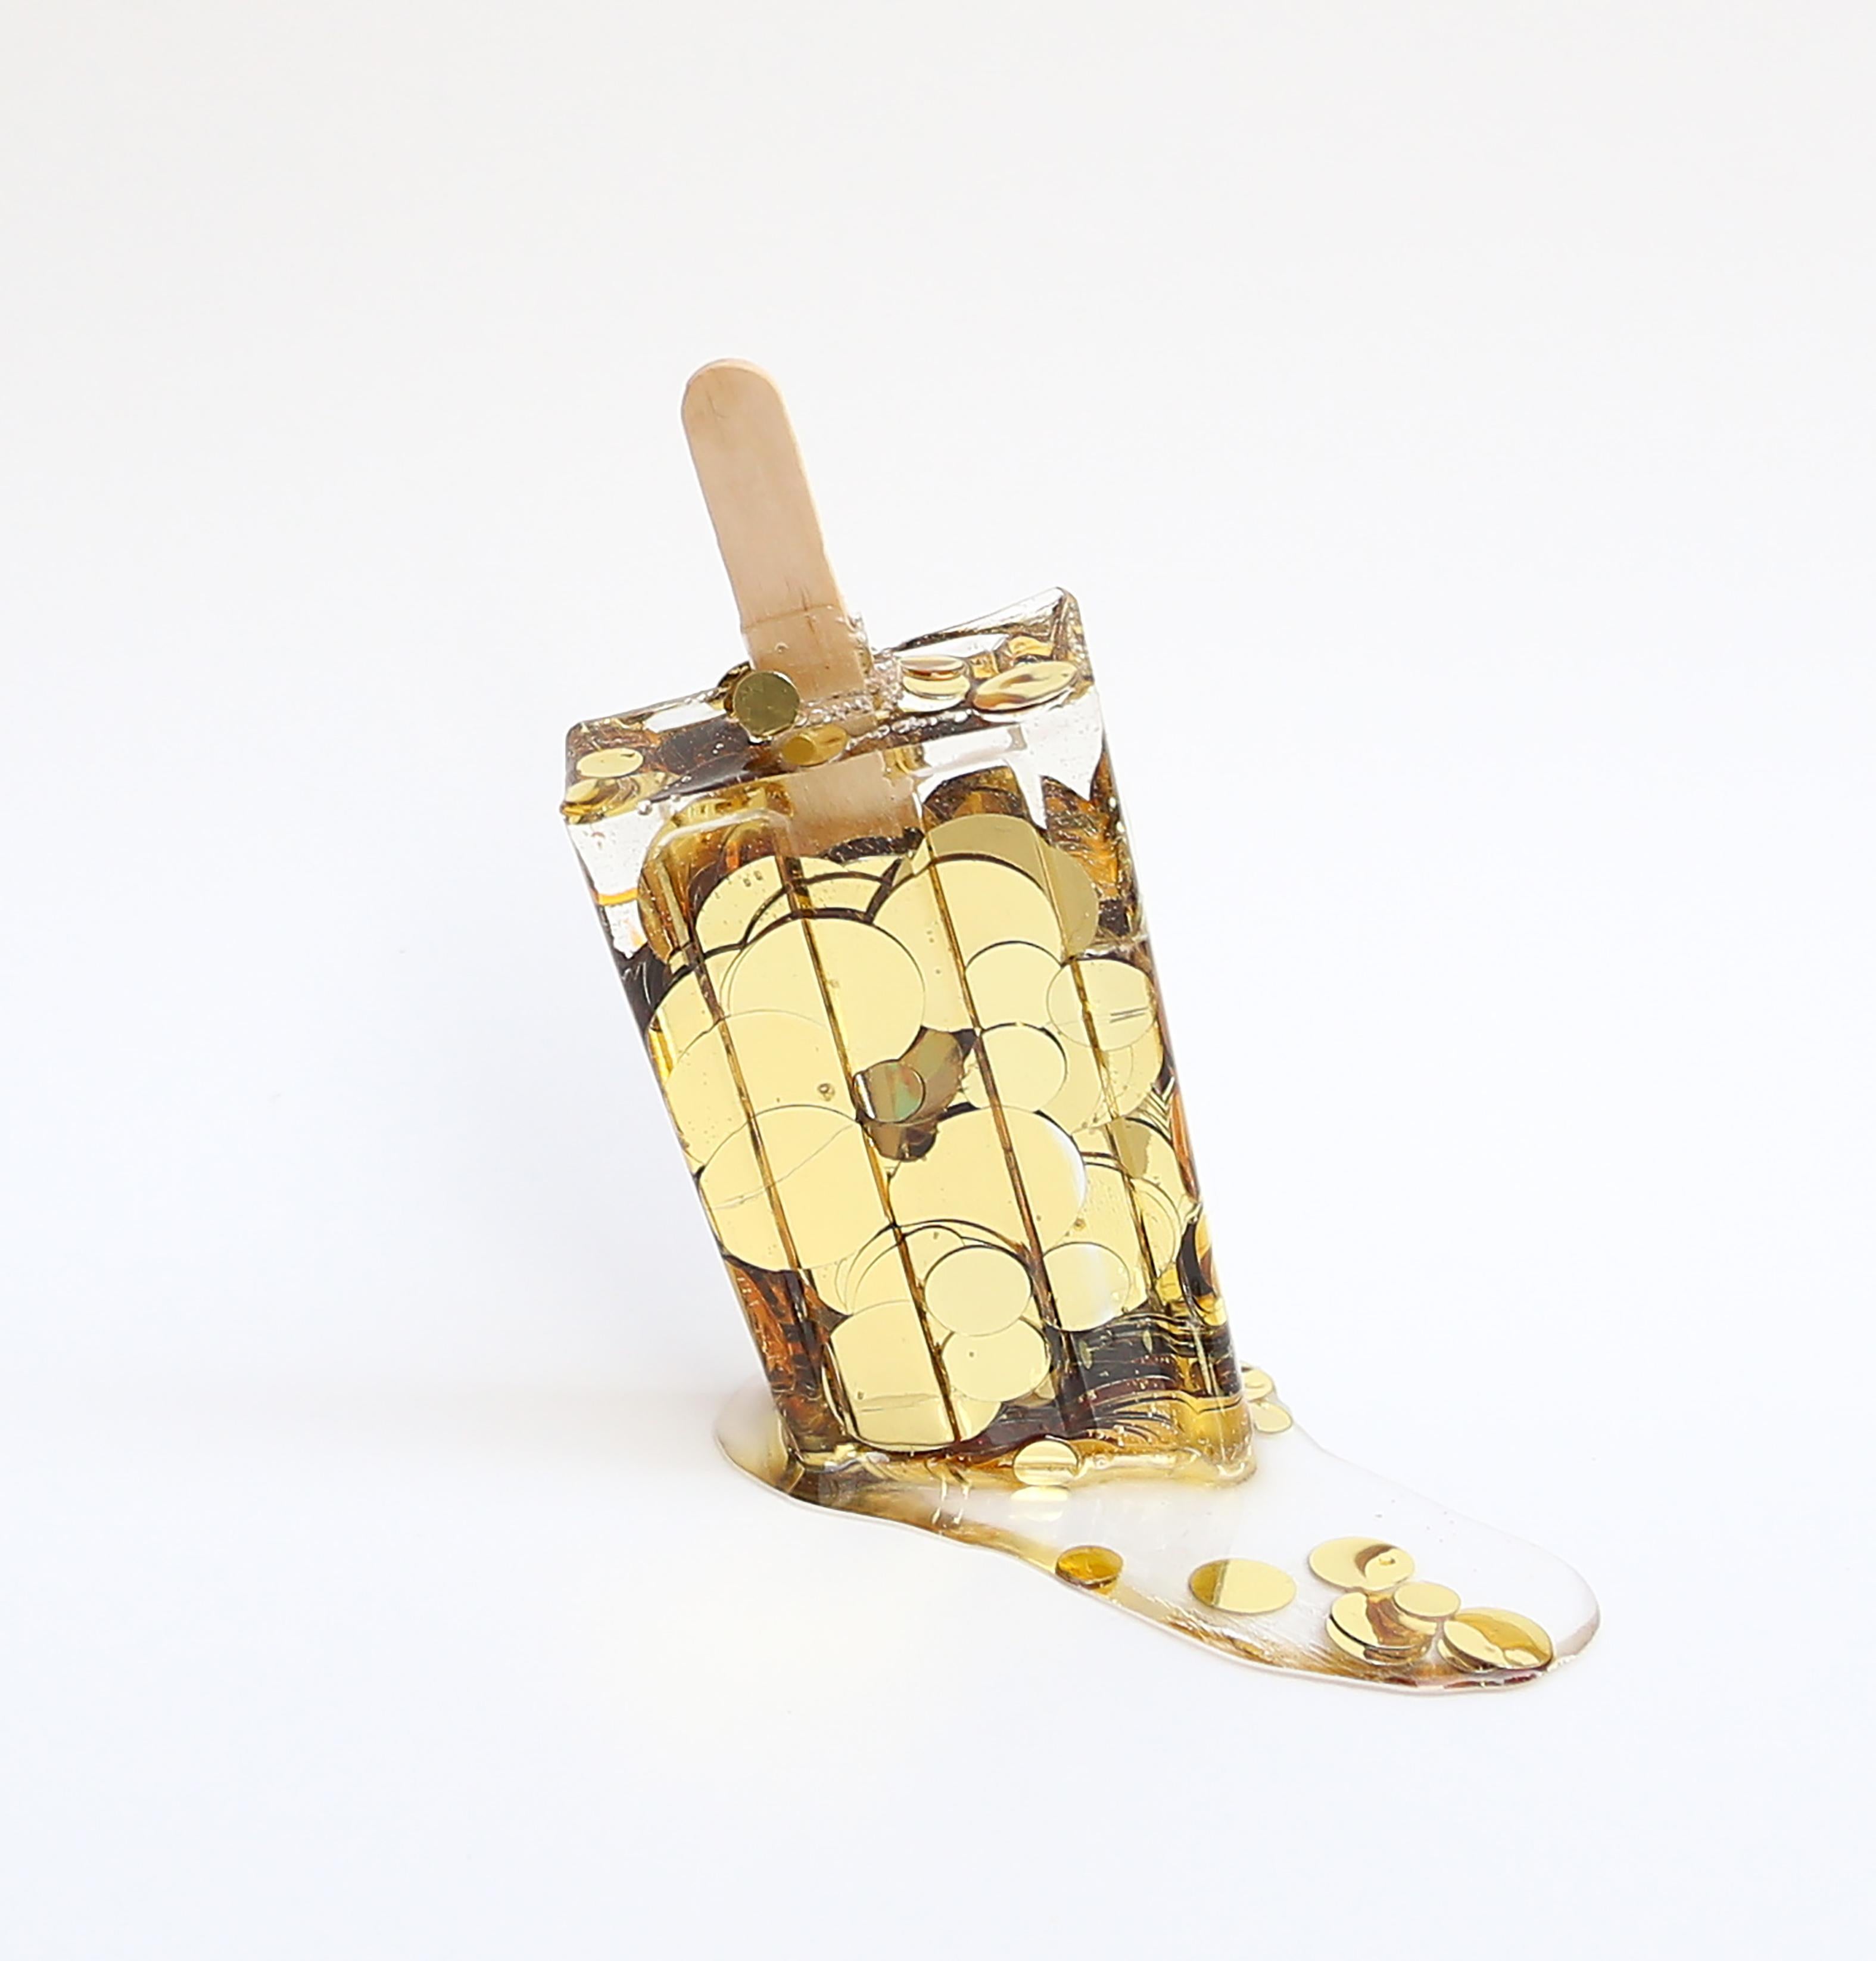 Betsy Enzensberger Figurative Sculpture - "Gold Flake Popsicle"-Original Resin Sculpture 